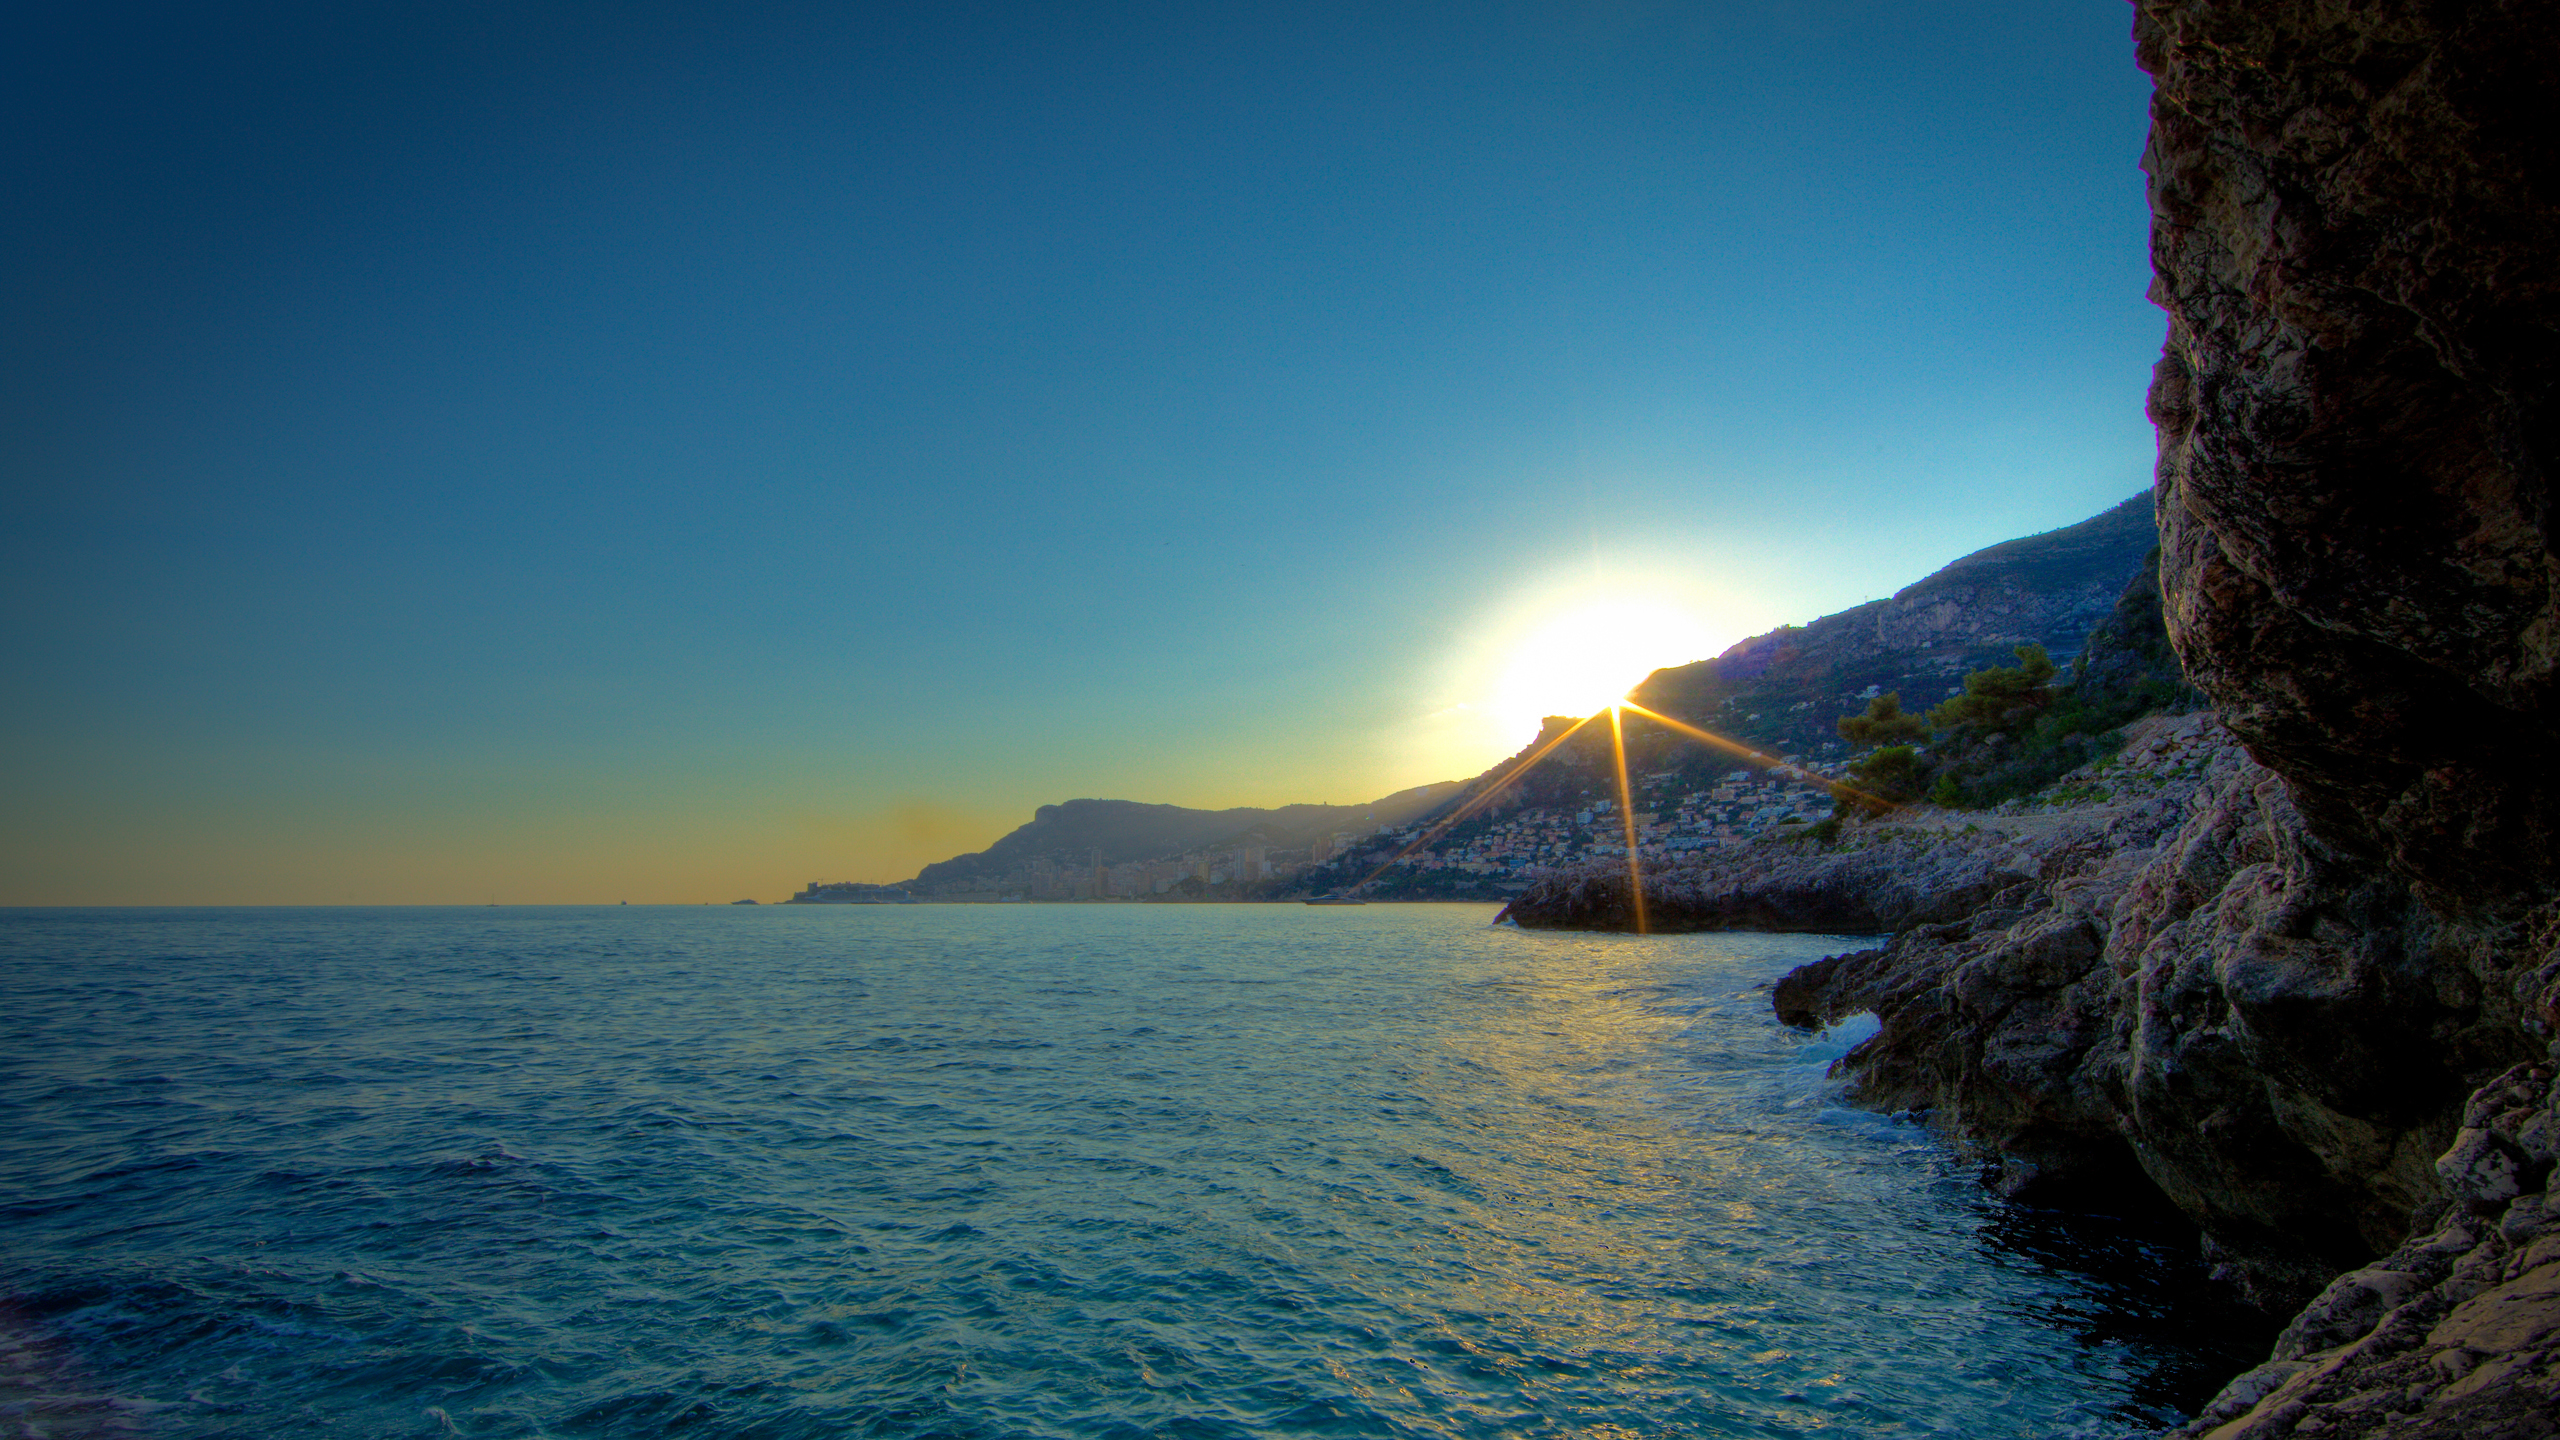 Cote d'Azur, Monaco: Breathtaking HD desktop wallpaper showcasing the stunning coastal beauty.